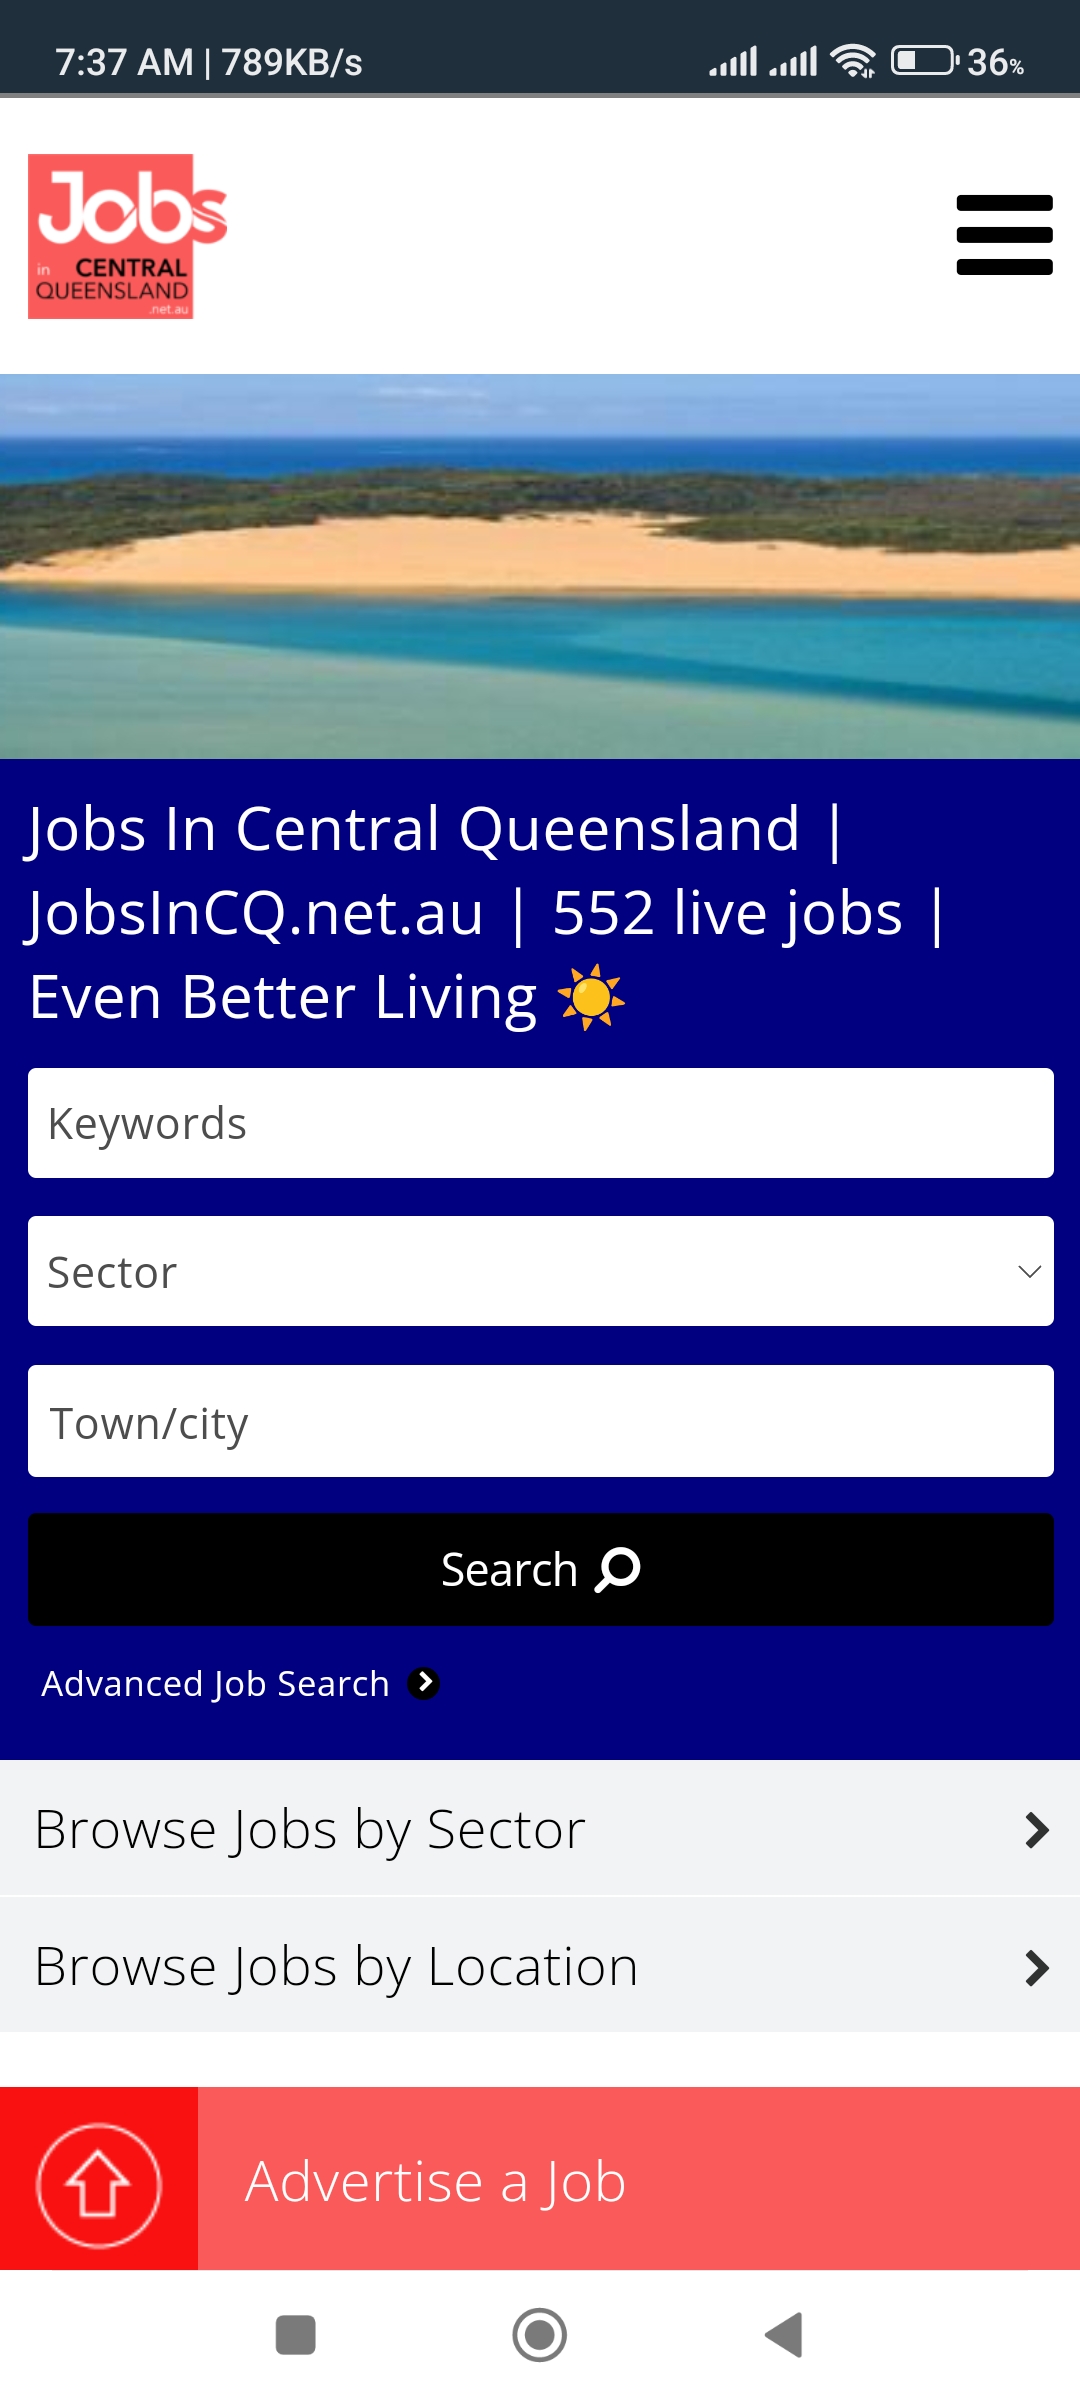 Jobs in Central Queensland